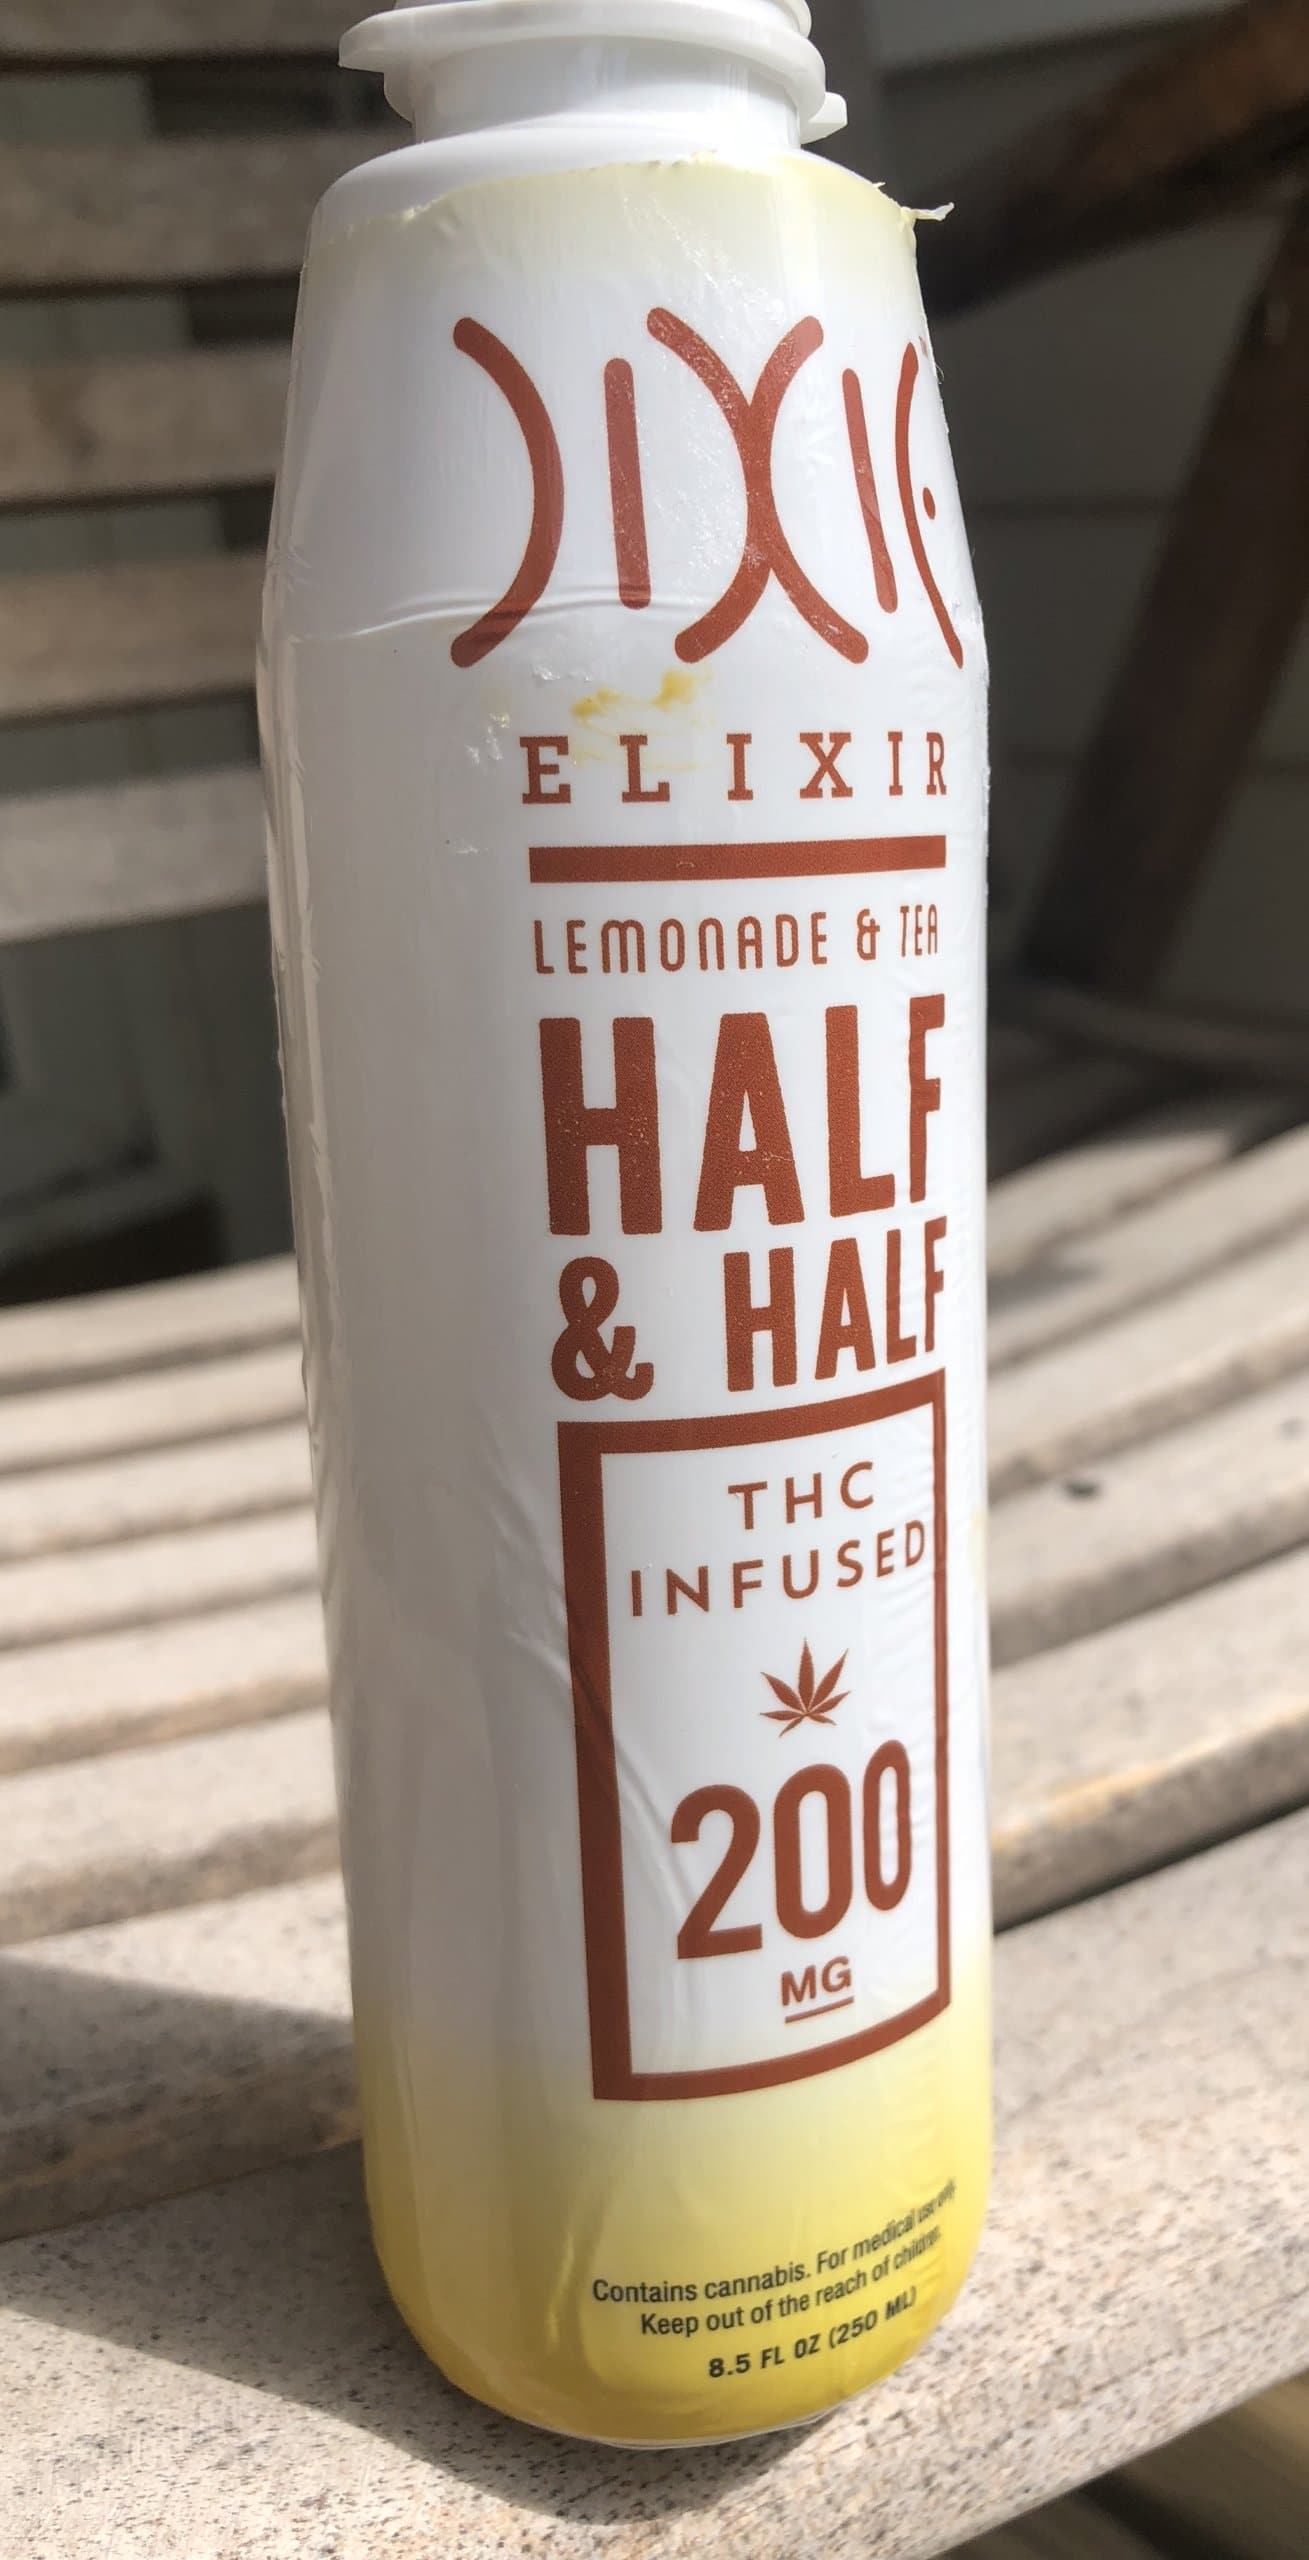 Dixie Elixir Half & Half photo